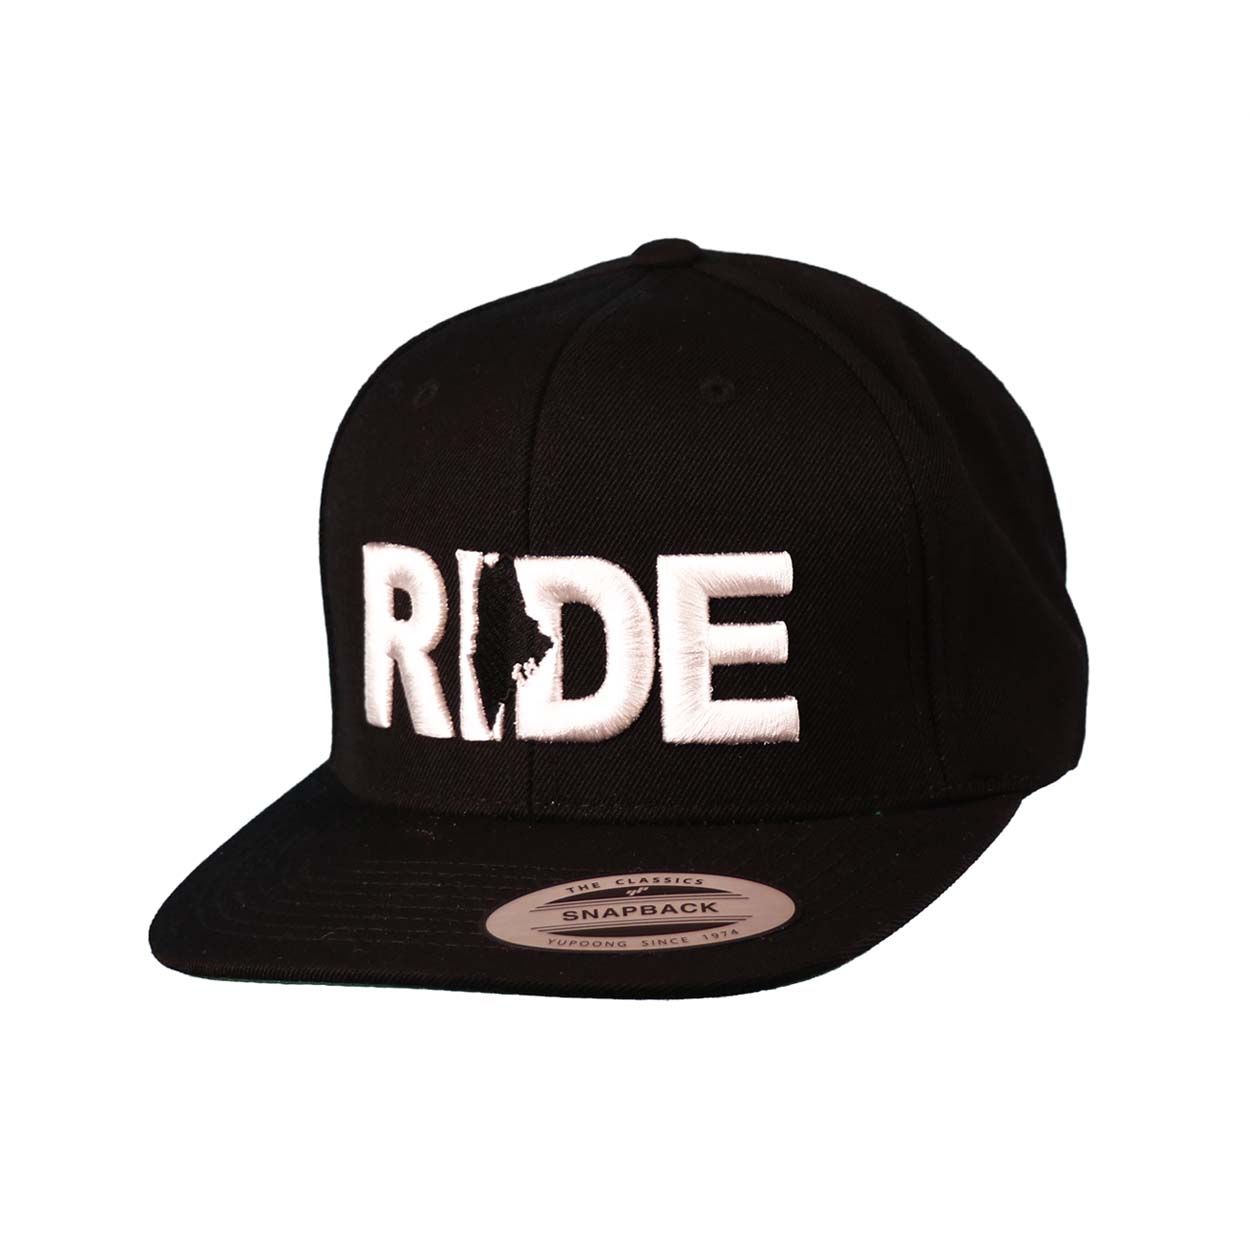 Ride Maine Classic Pro 3D Puff Embroidered Snapback Flat Brim Hat Black